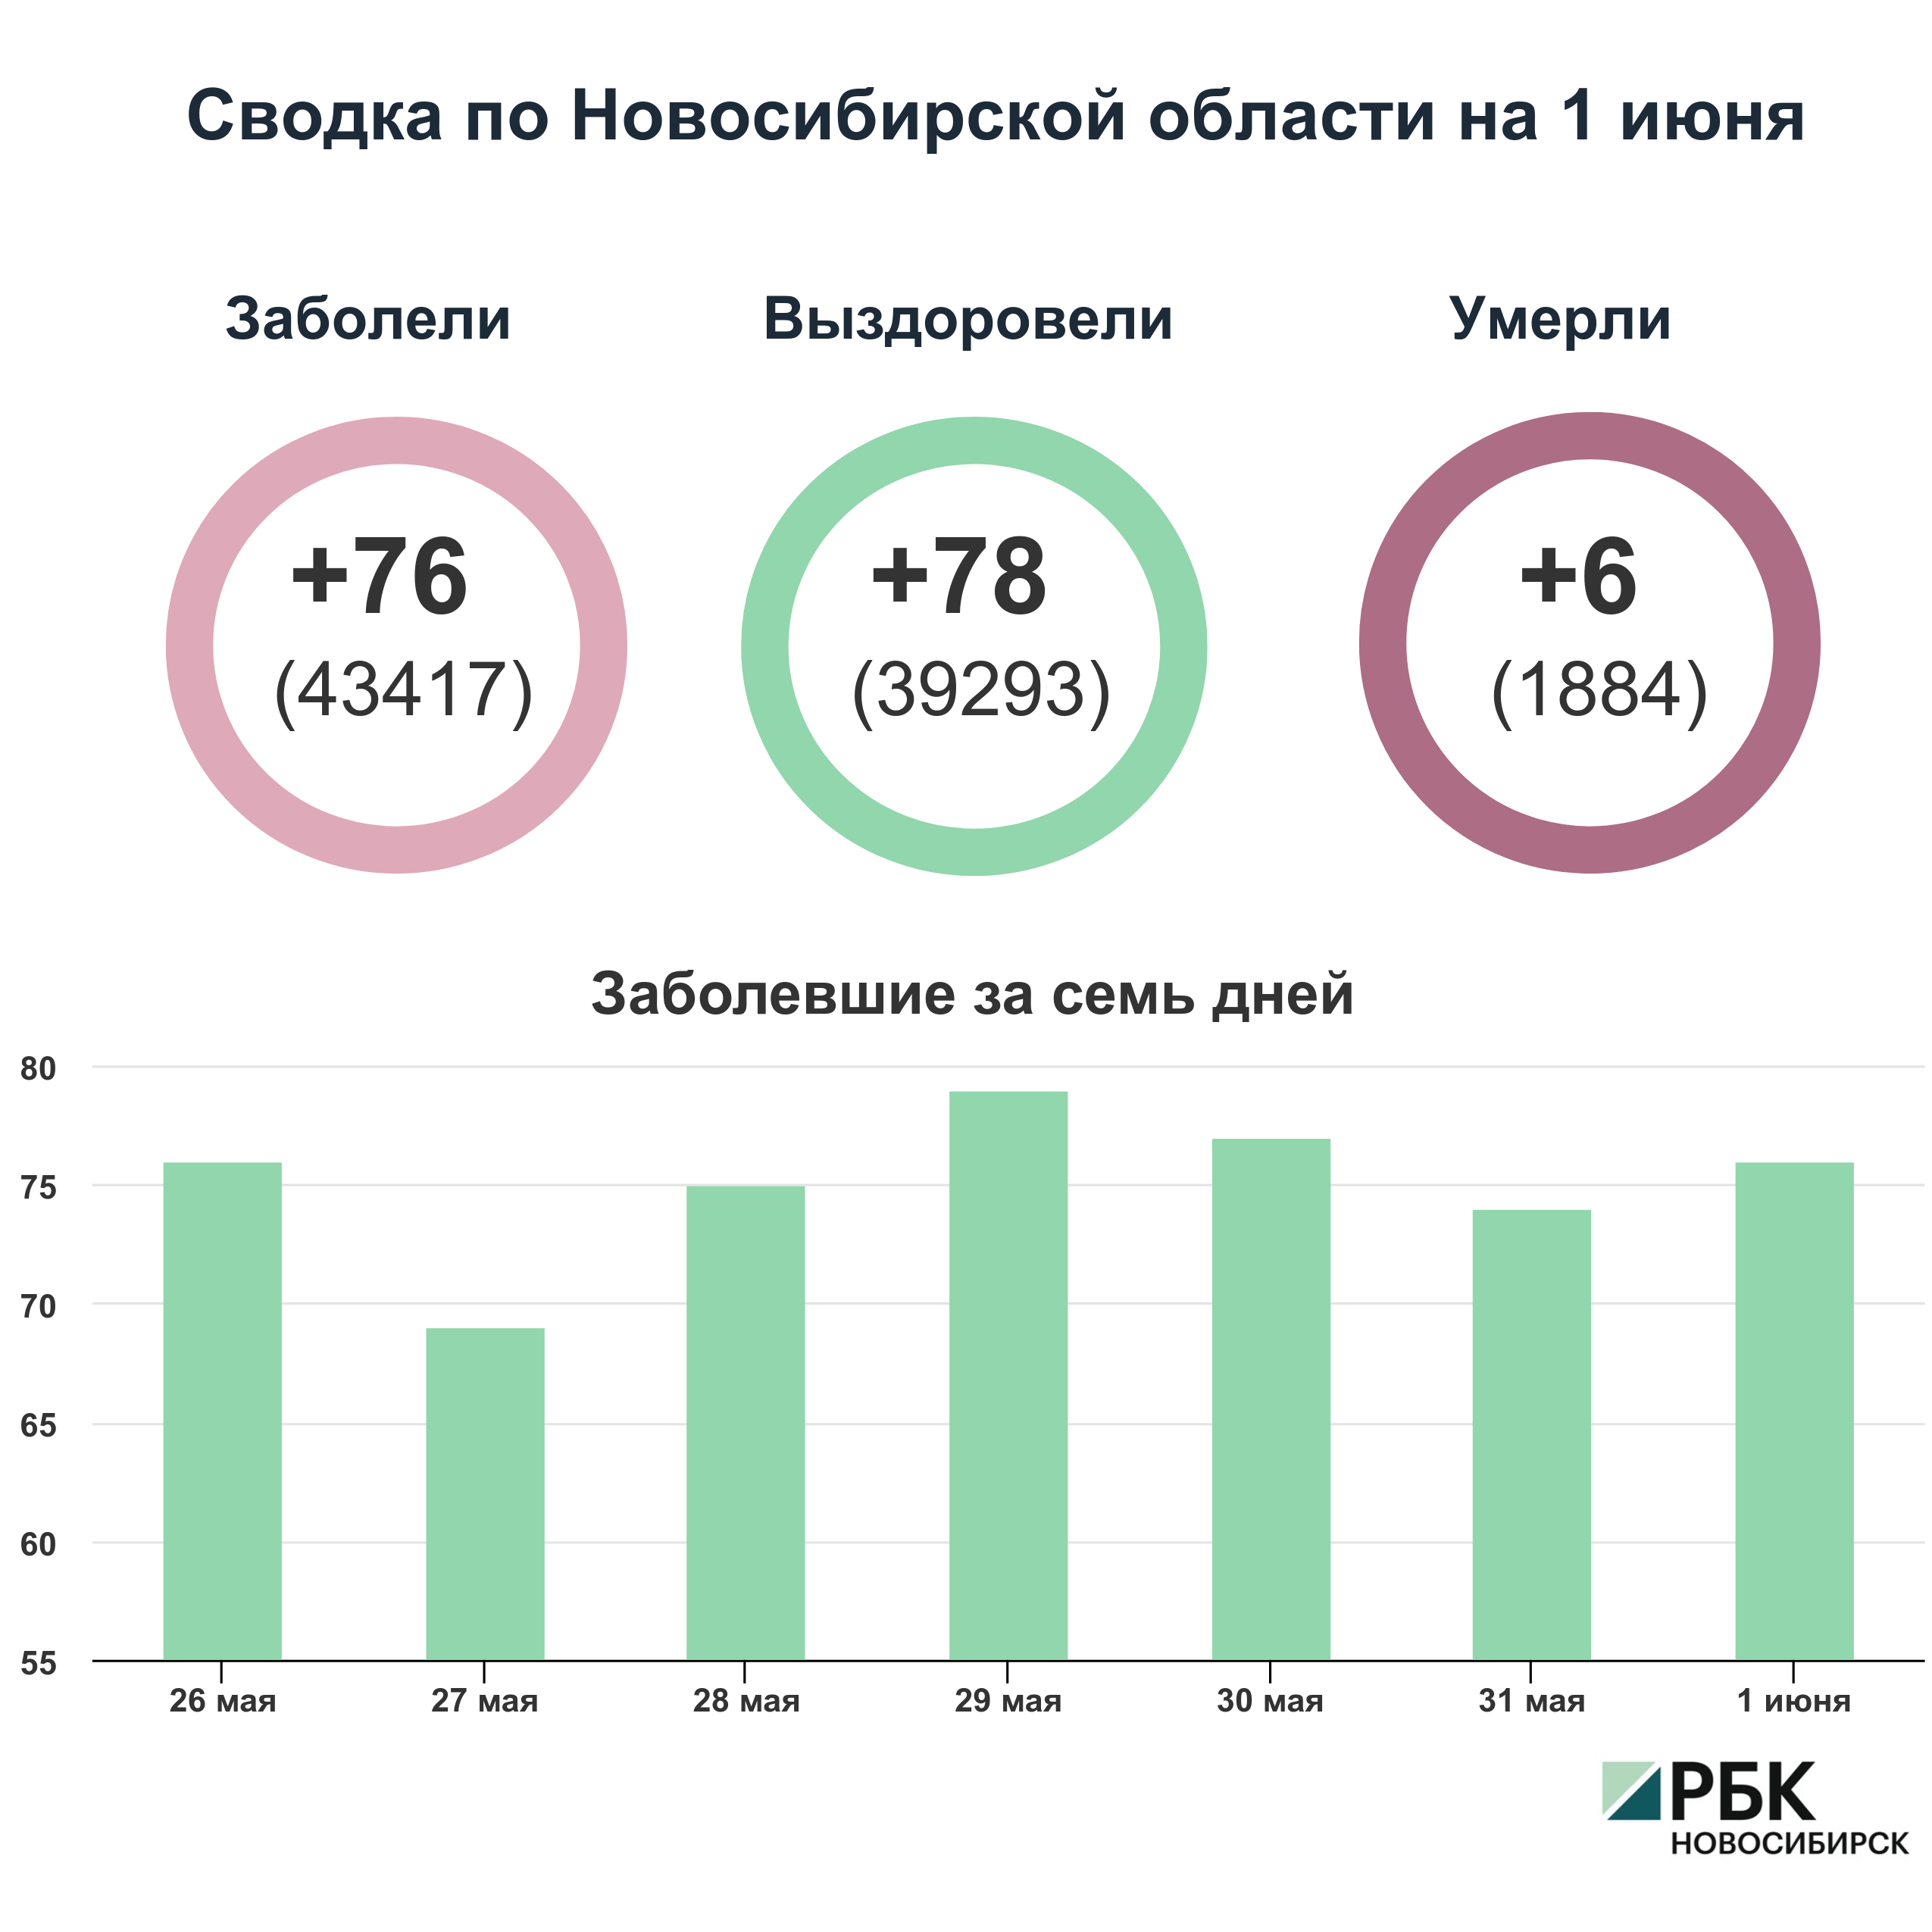 Коронавирус в Новосибирске: сводка на 1 июня